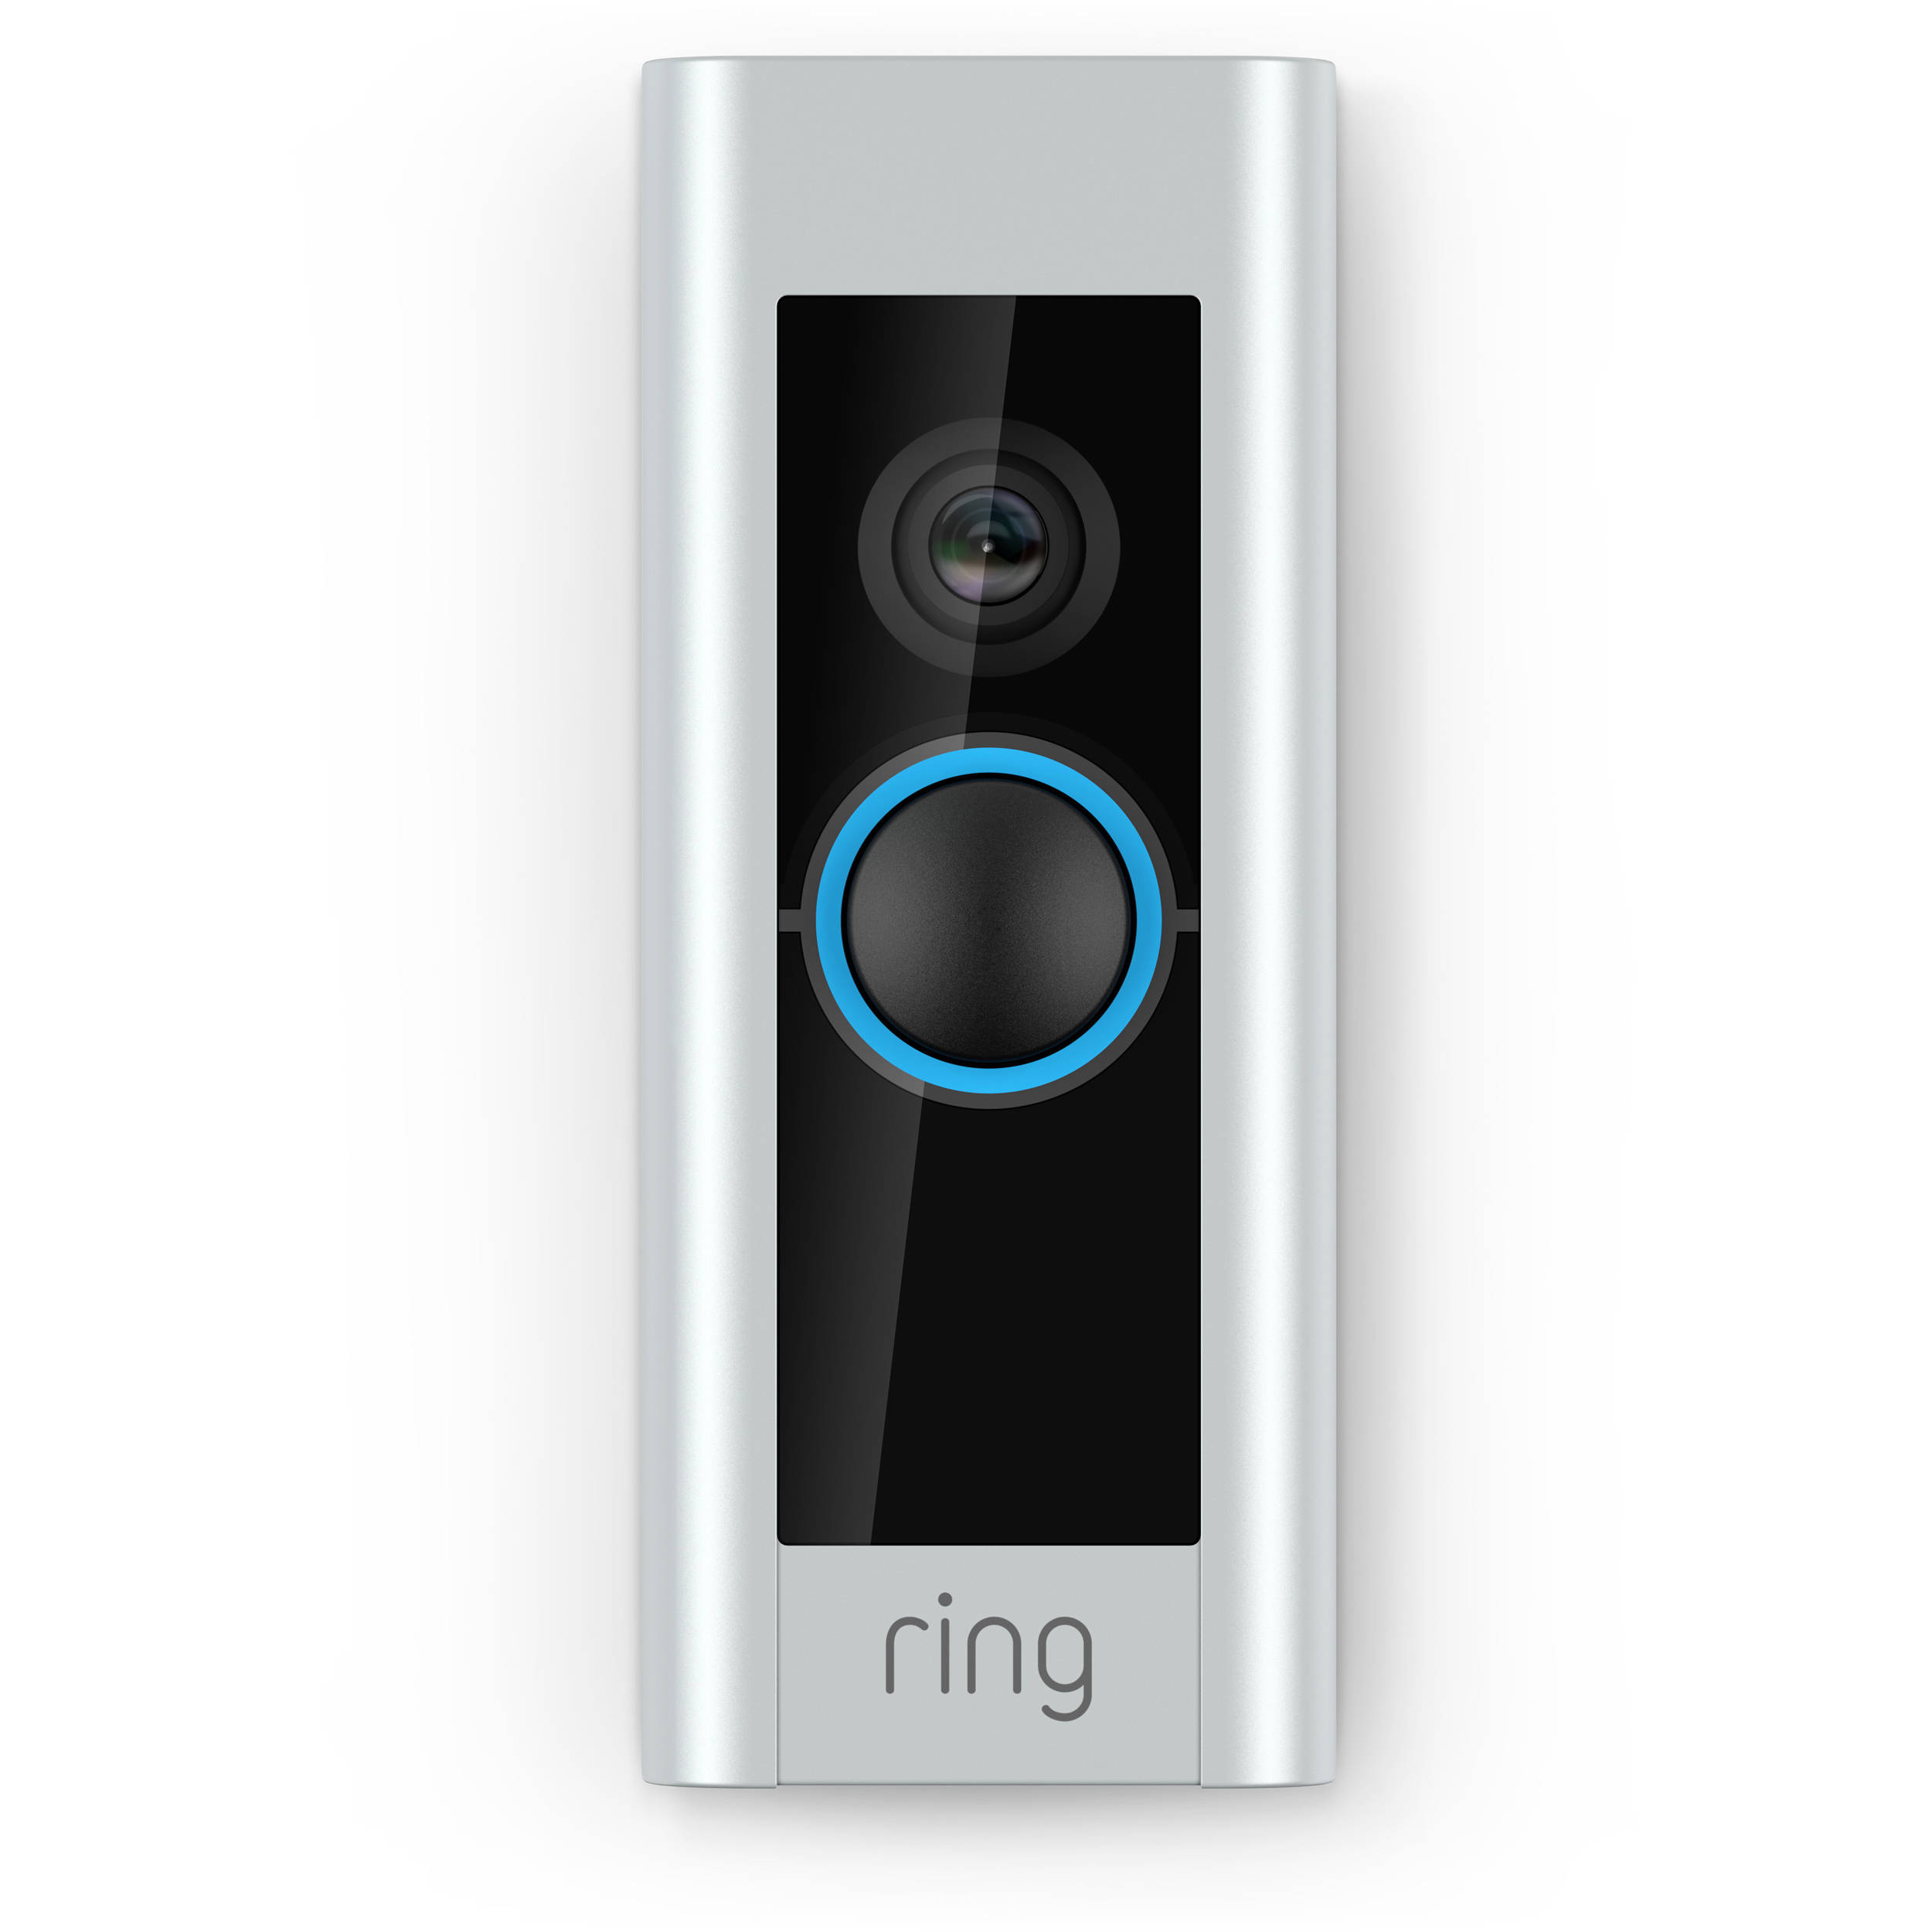 ring doorbell slickdeals